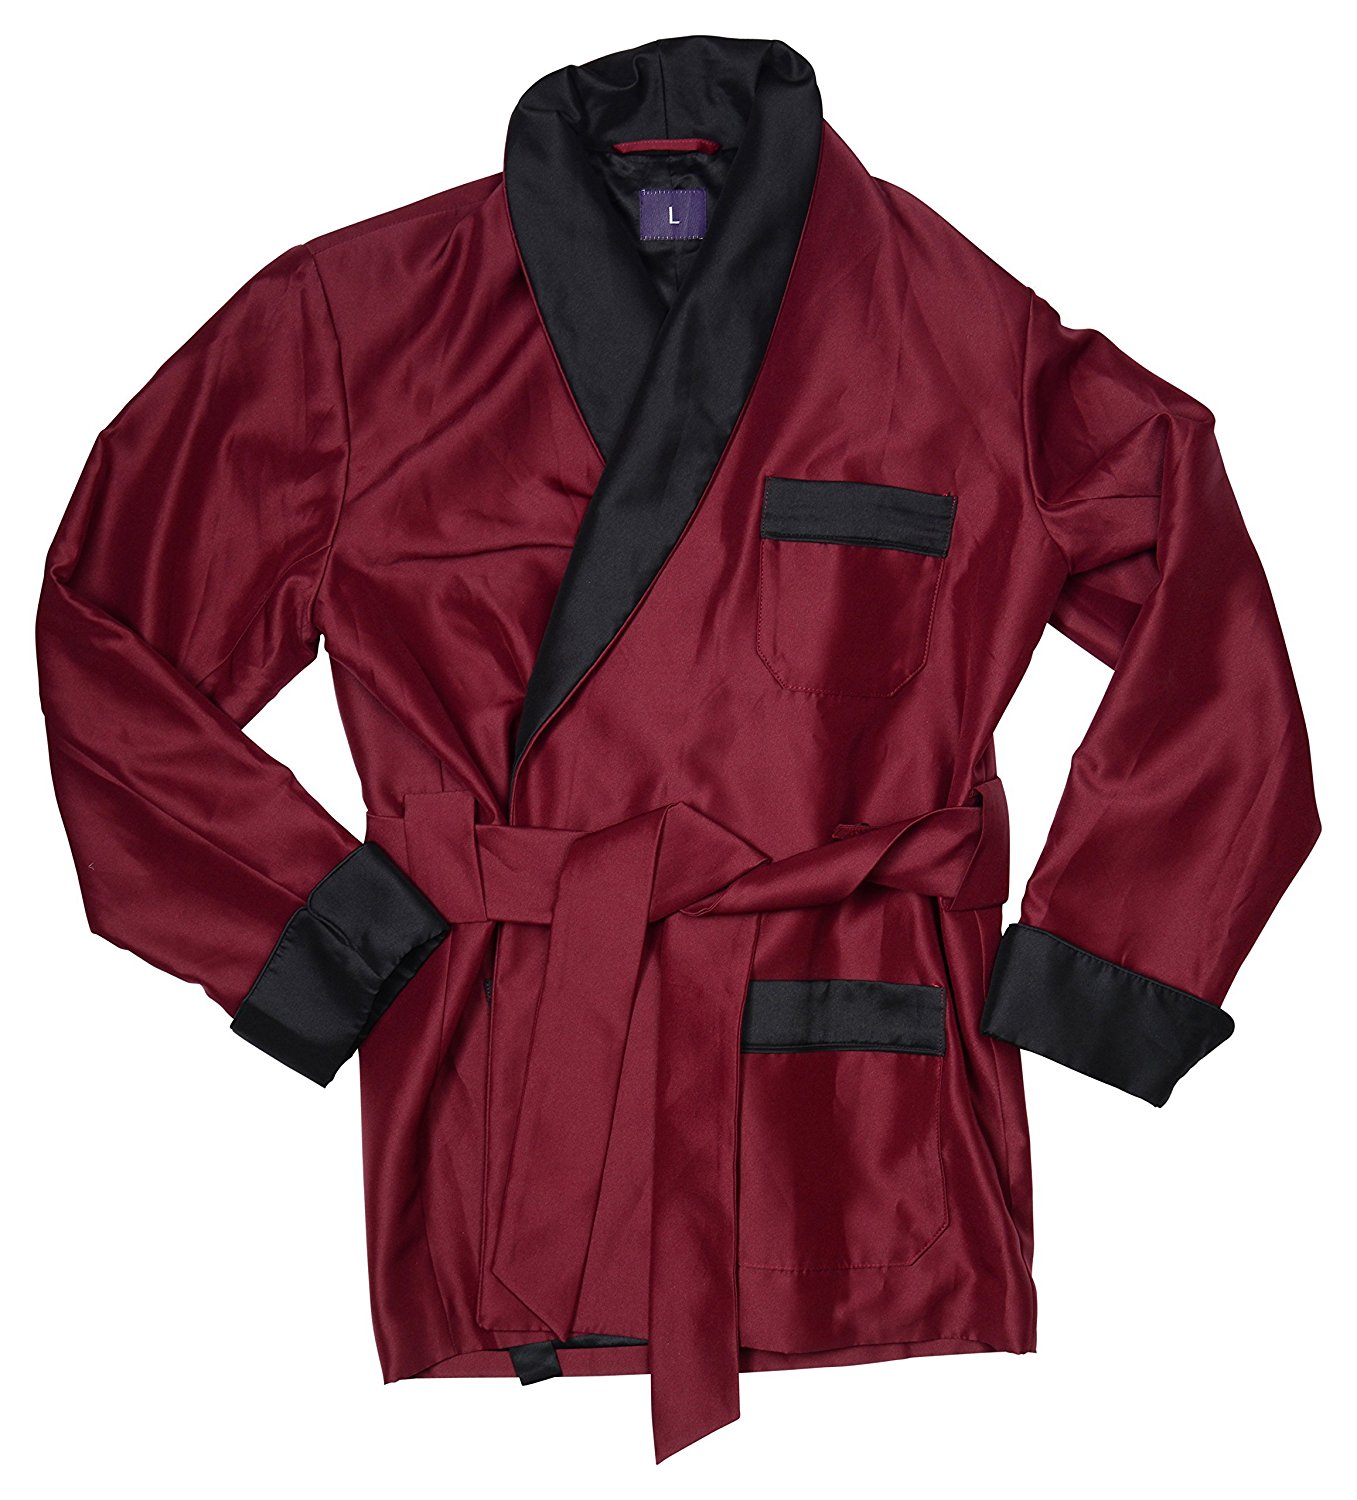 menu0027s smoking jacket perry burgundy at amazon menu0027s clothing store: smlxrsj